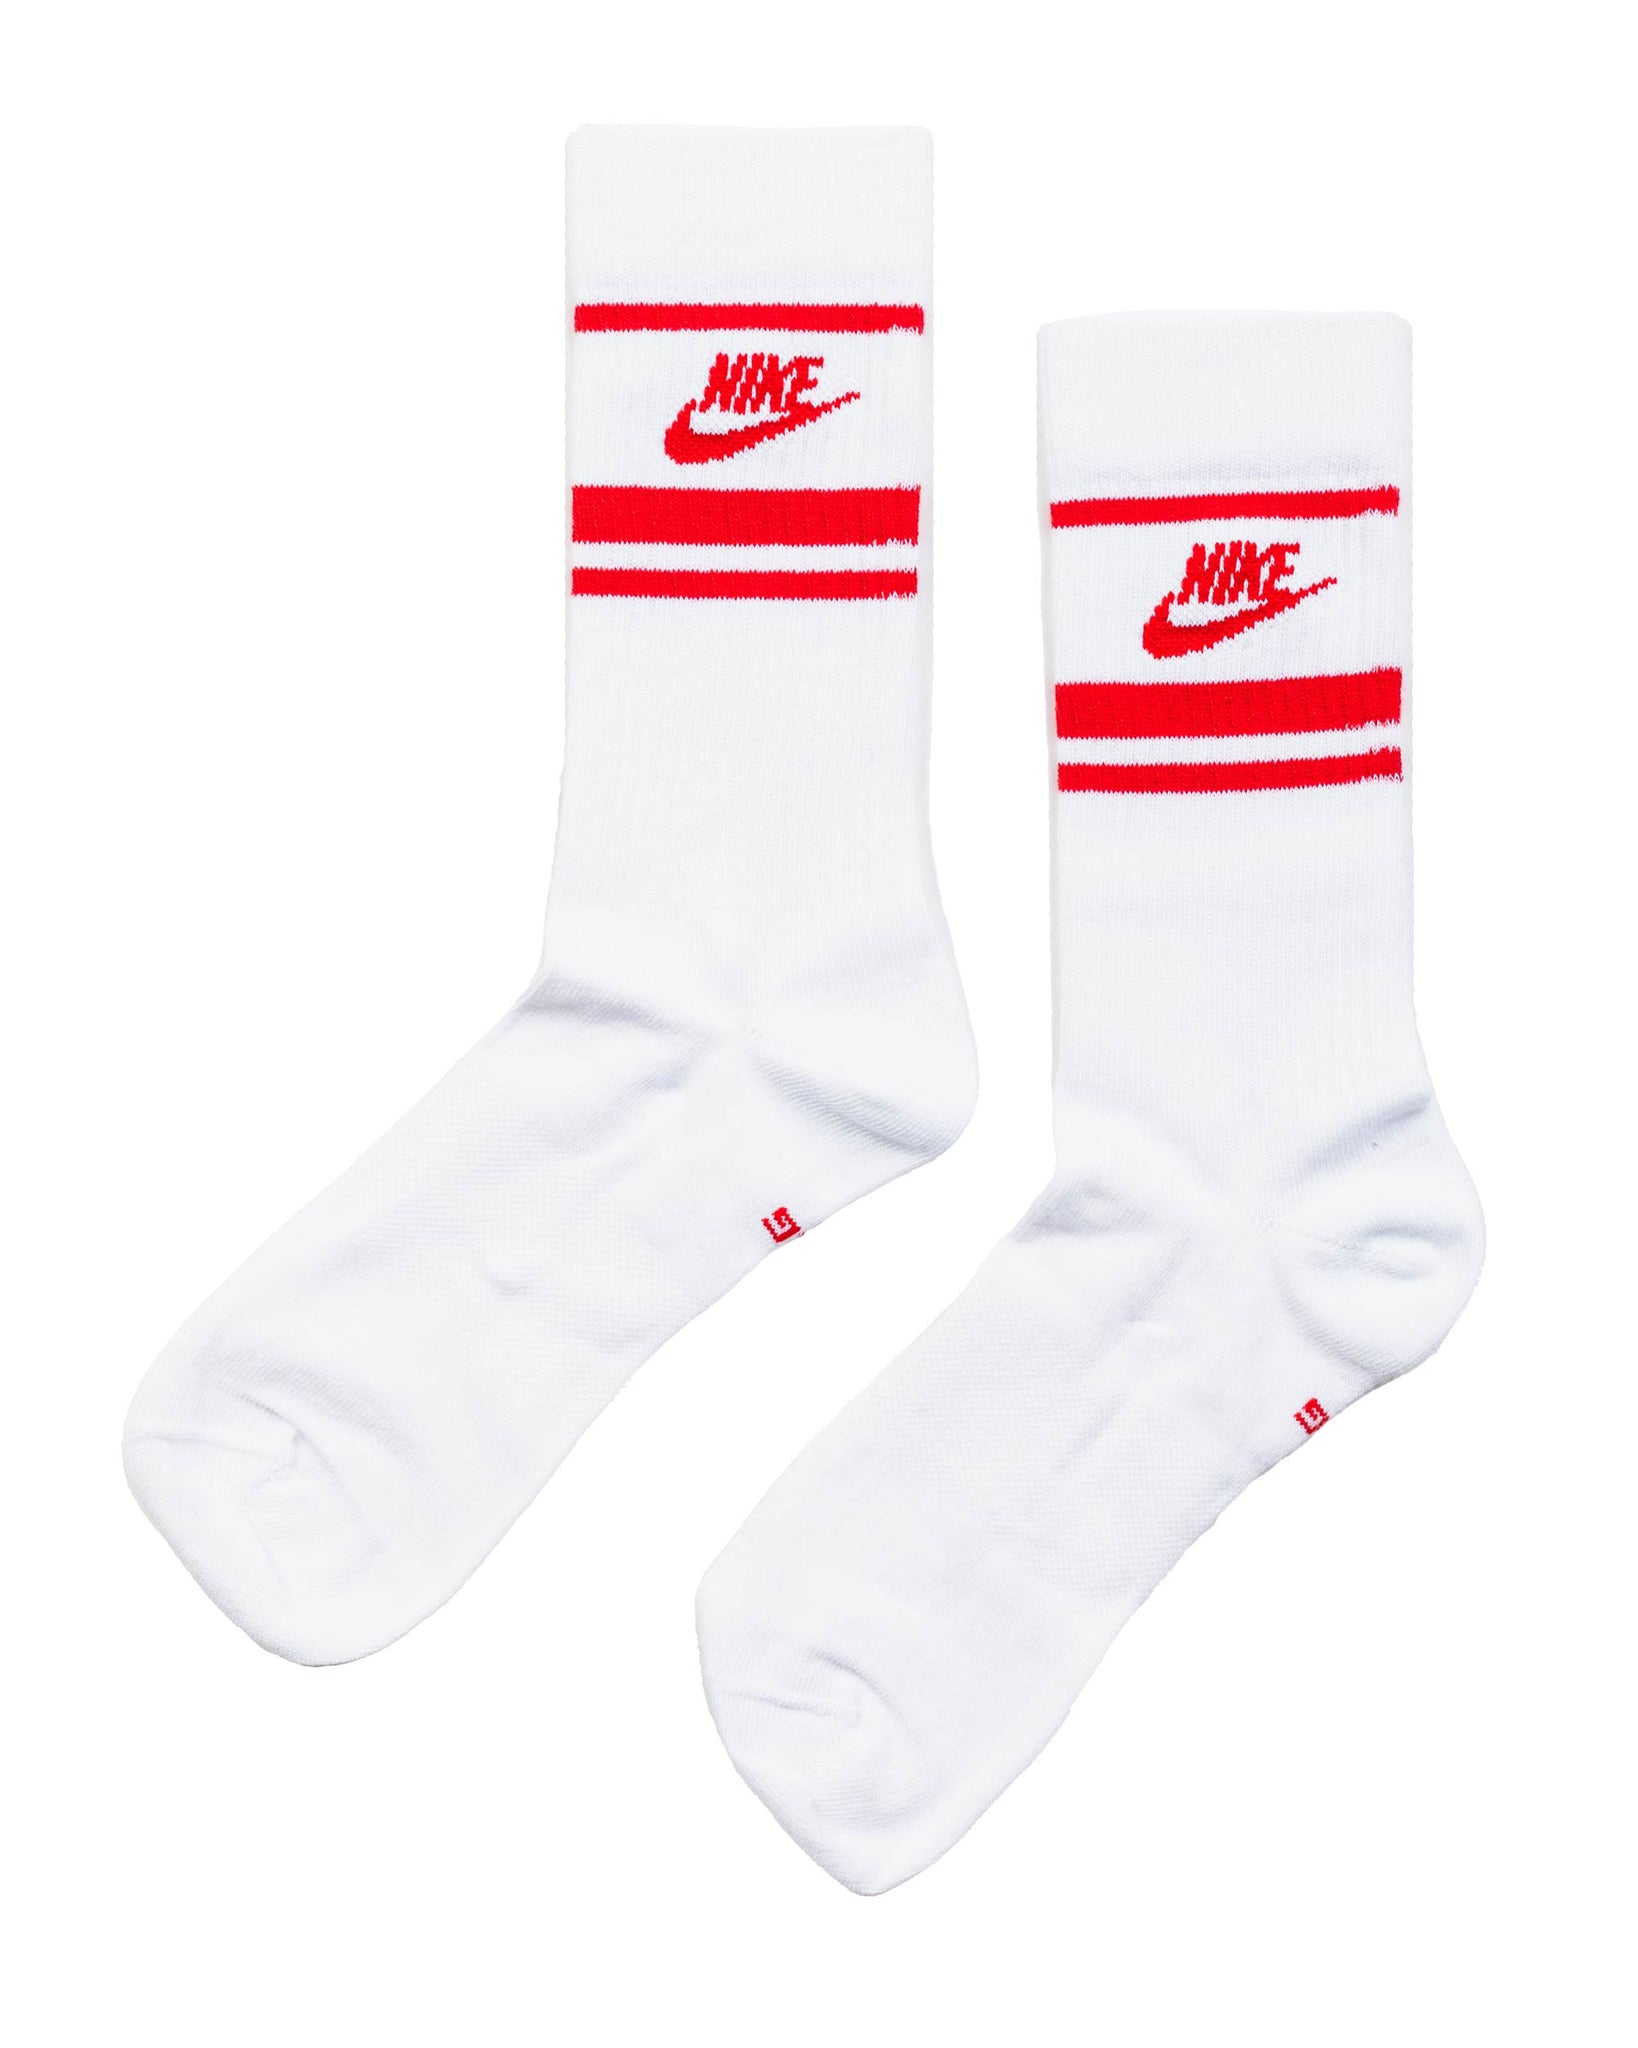 Nike Sportswear Everyday Essential Crew Socks White/University Red (3 Pack)